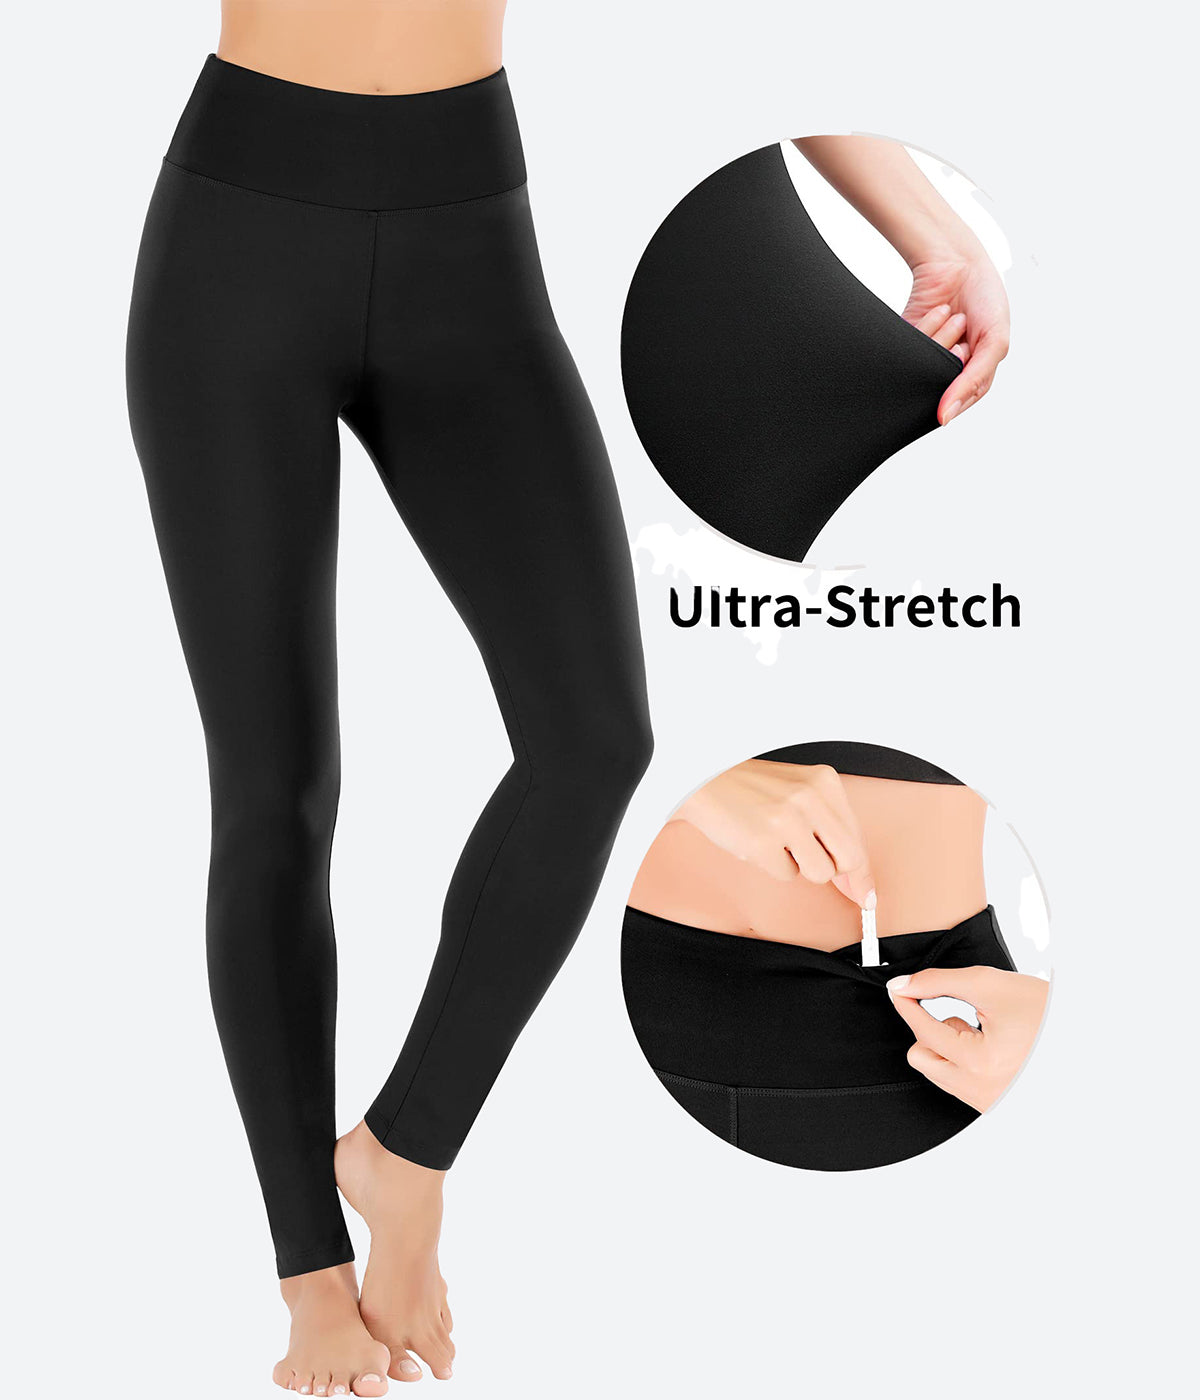 High Waisted Leggings For Women- Soft Tummy Control Slimming Yoga